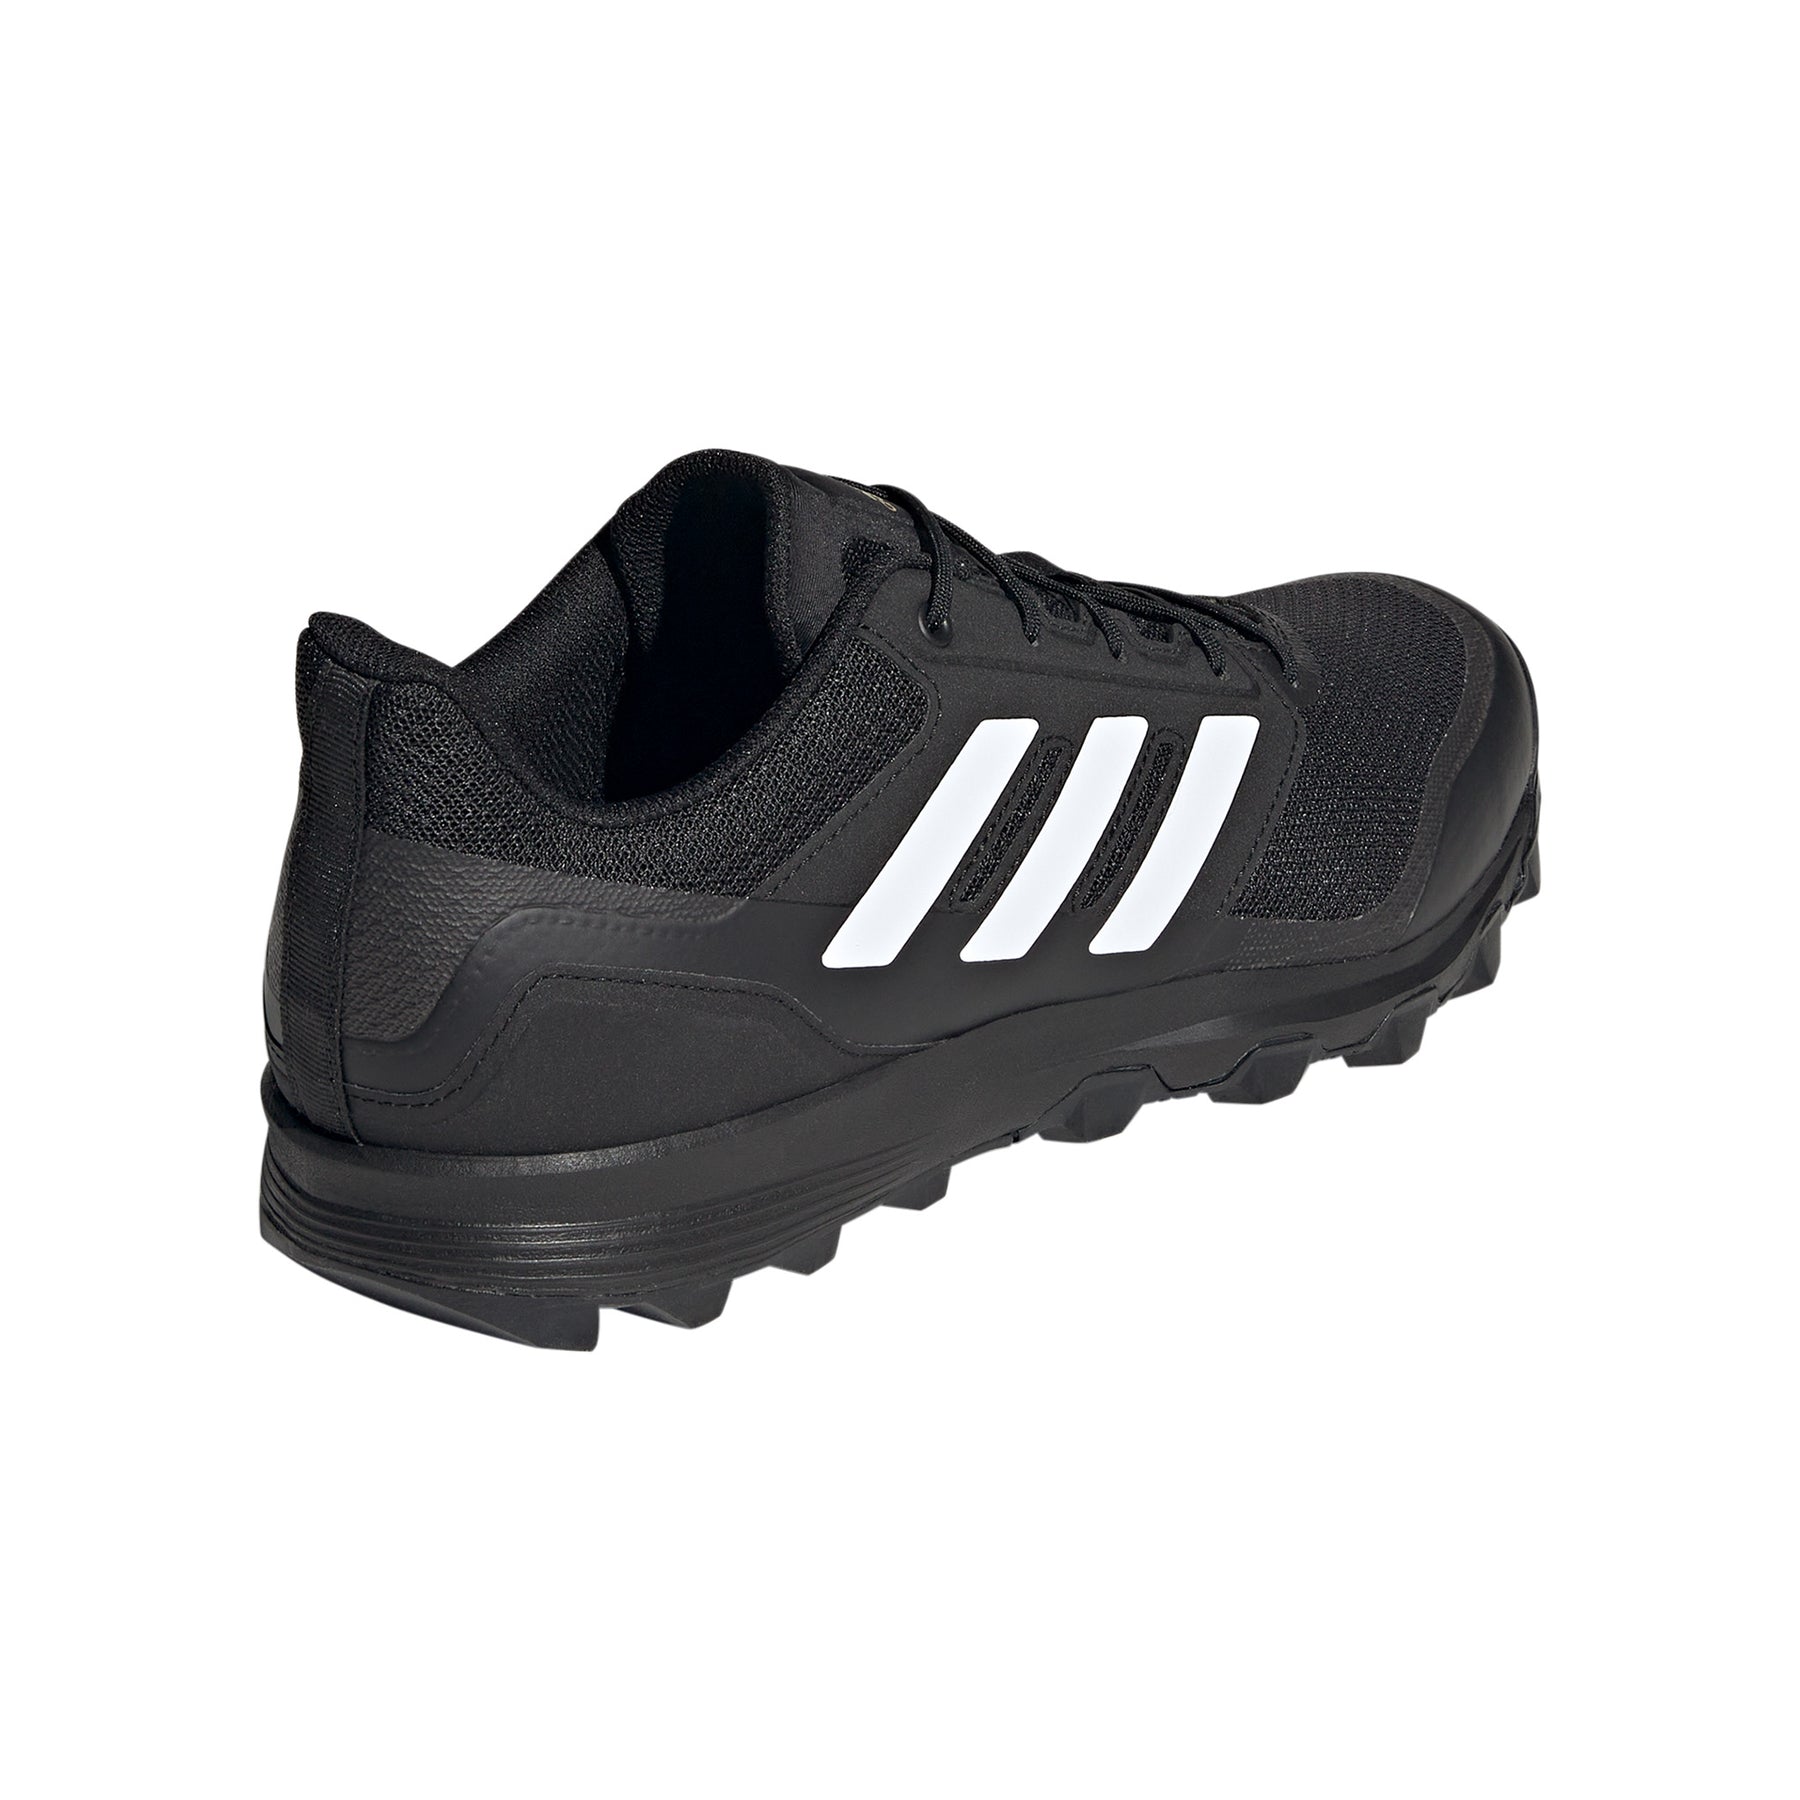 Adidas Flexcloud 2.1 Hockey Shoes: Black